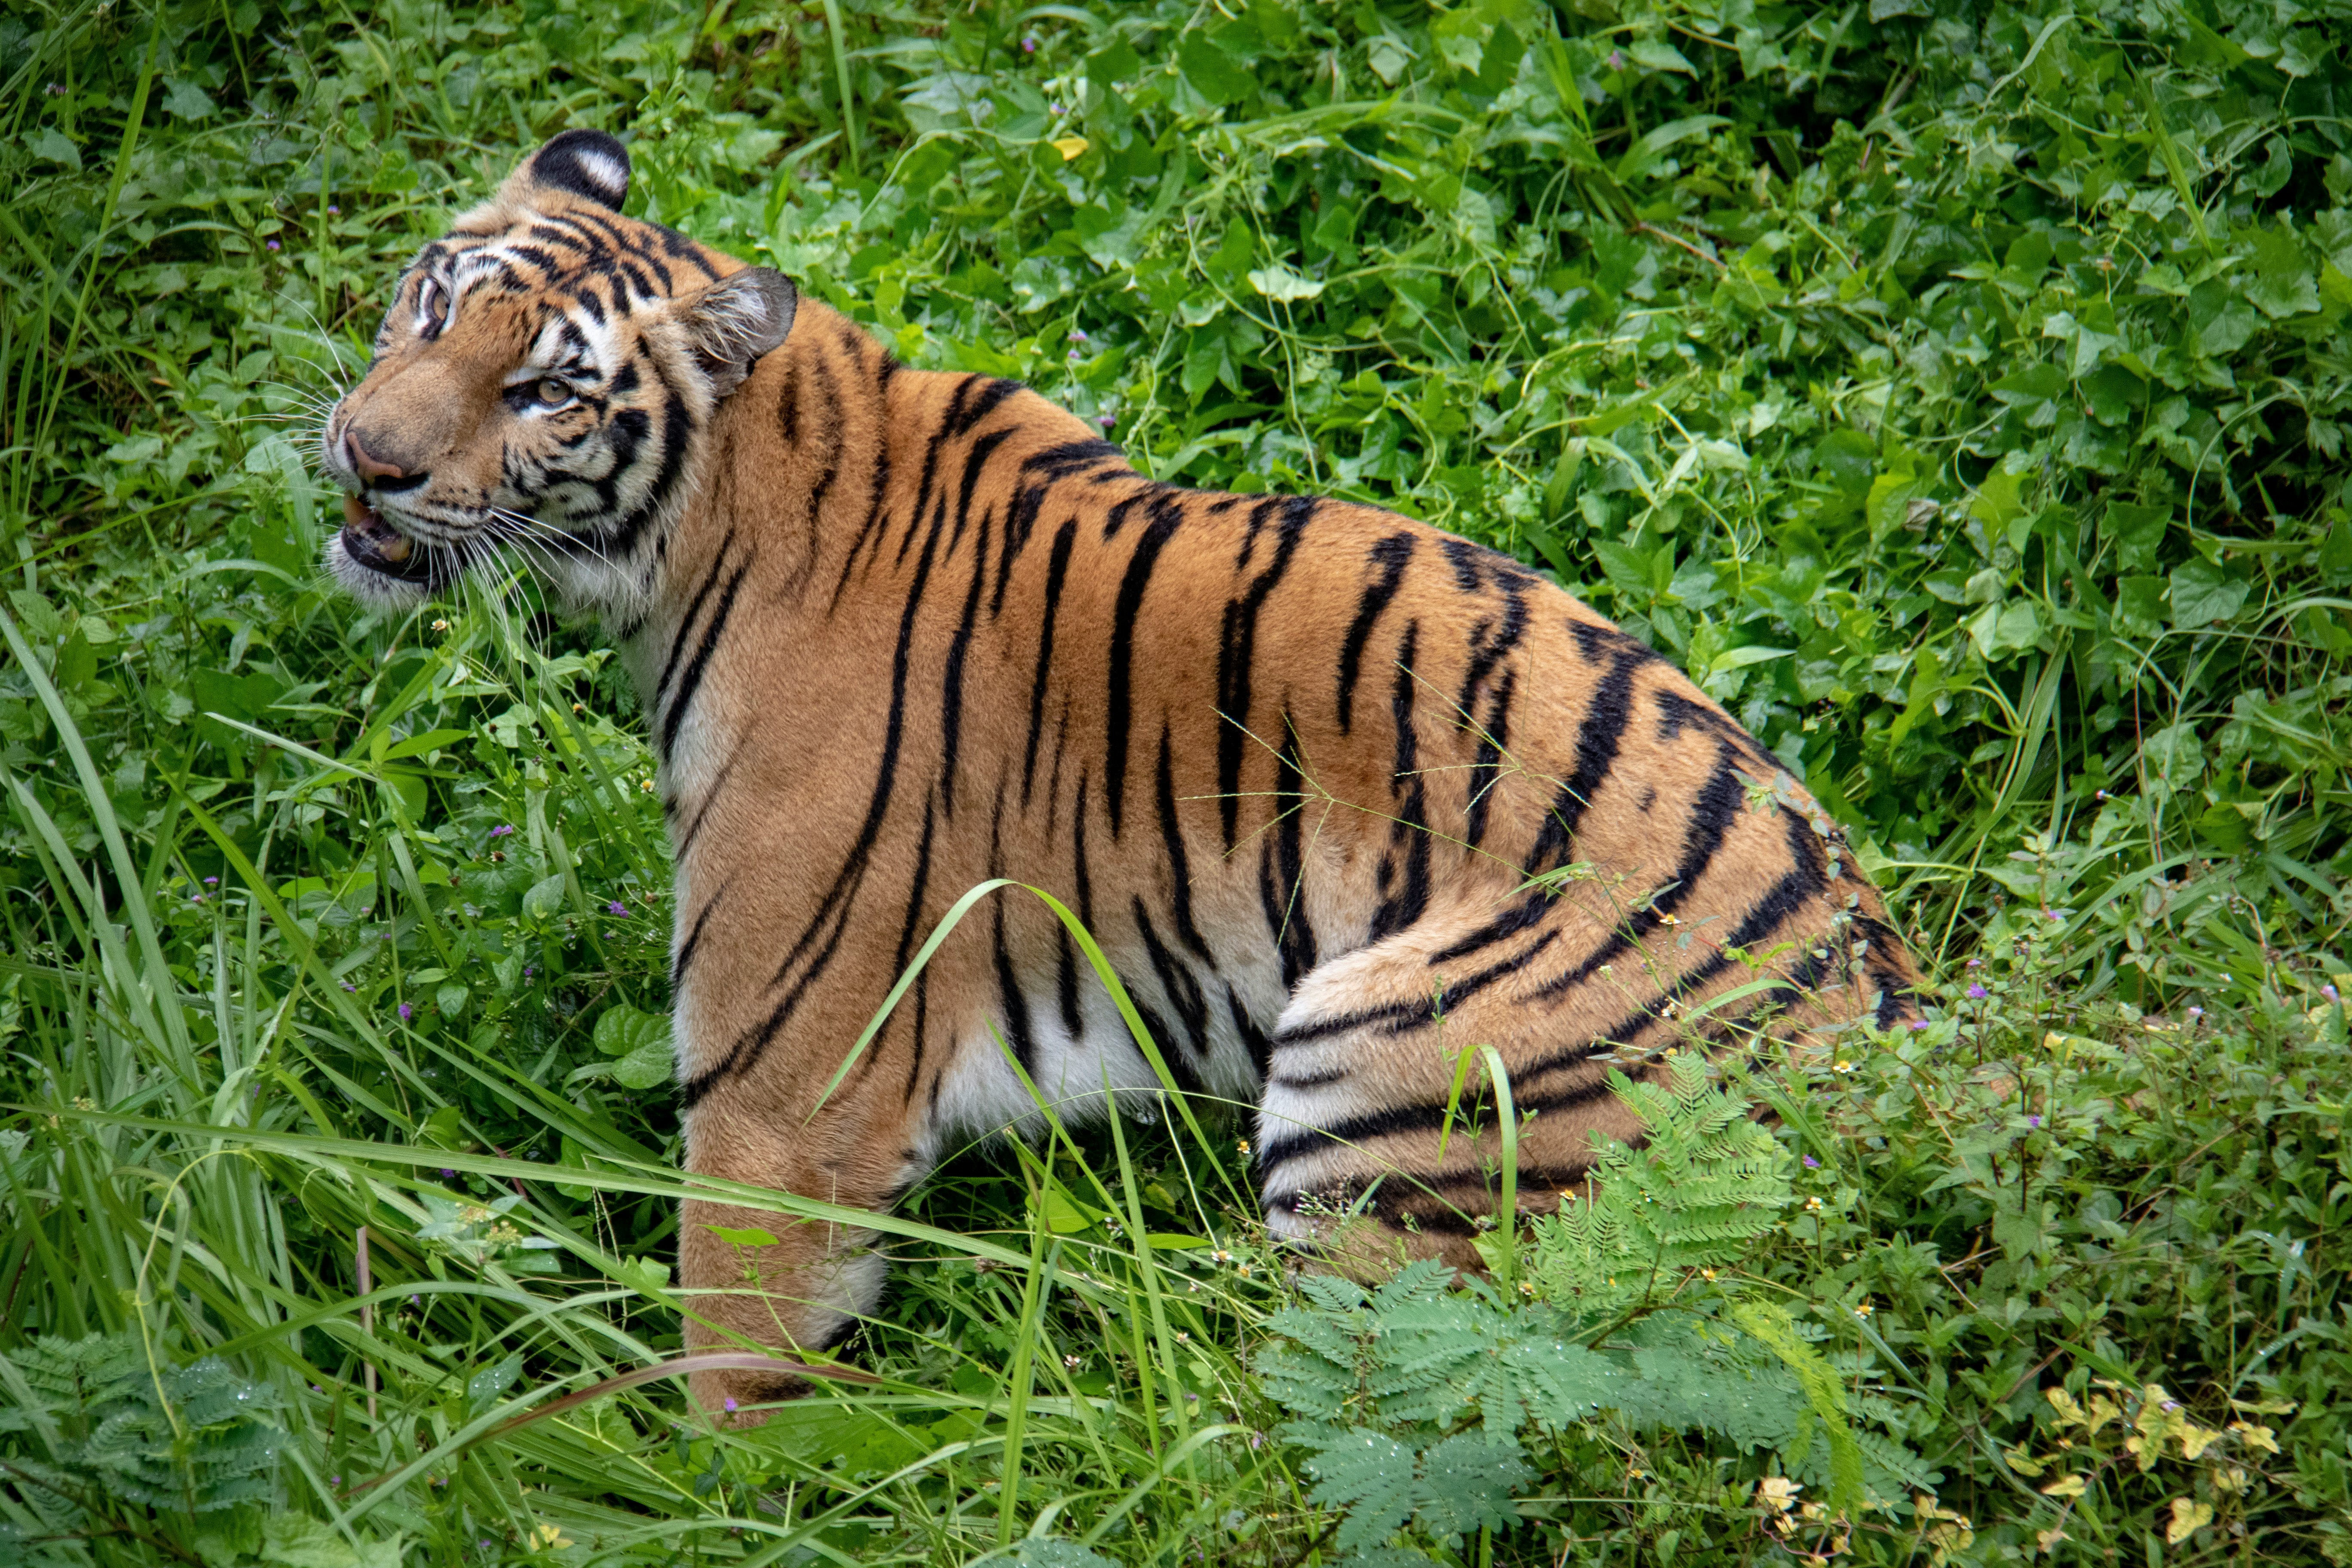 brown tiger sitting on green grass